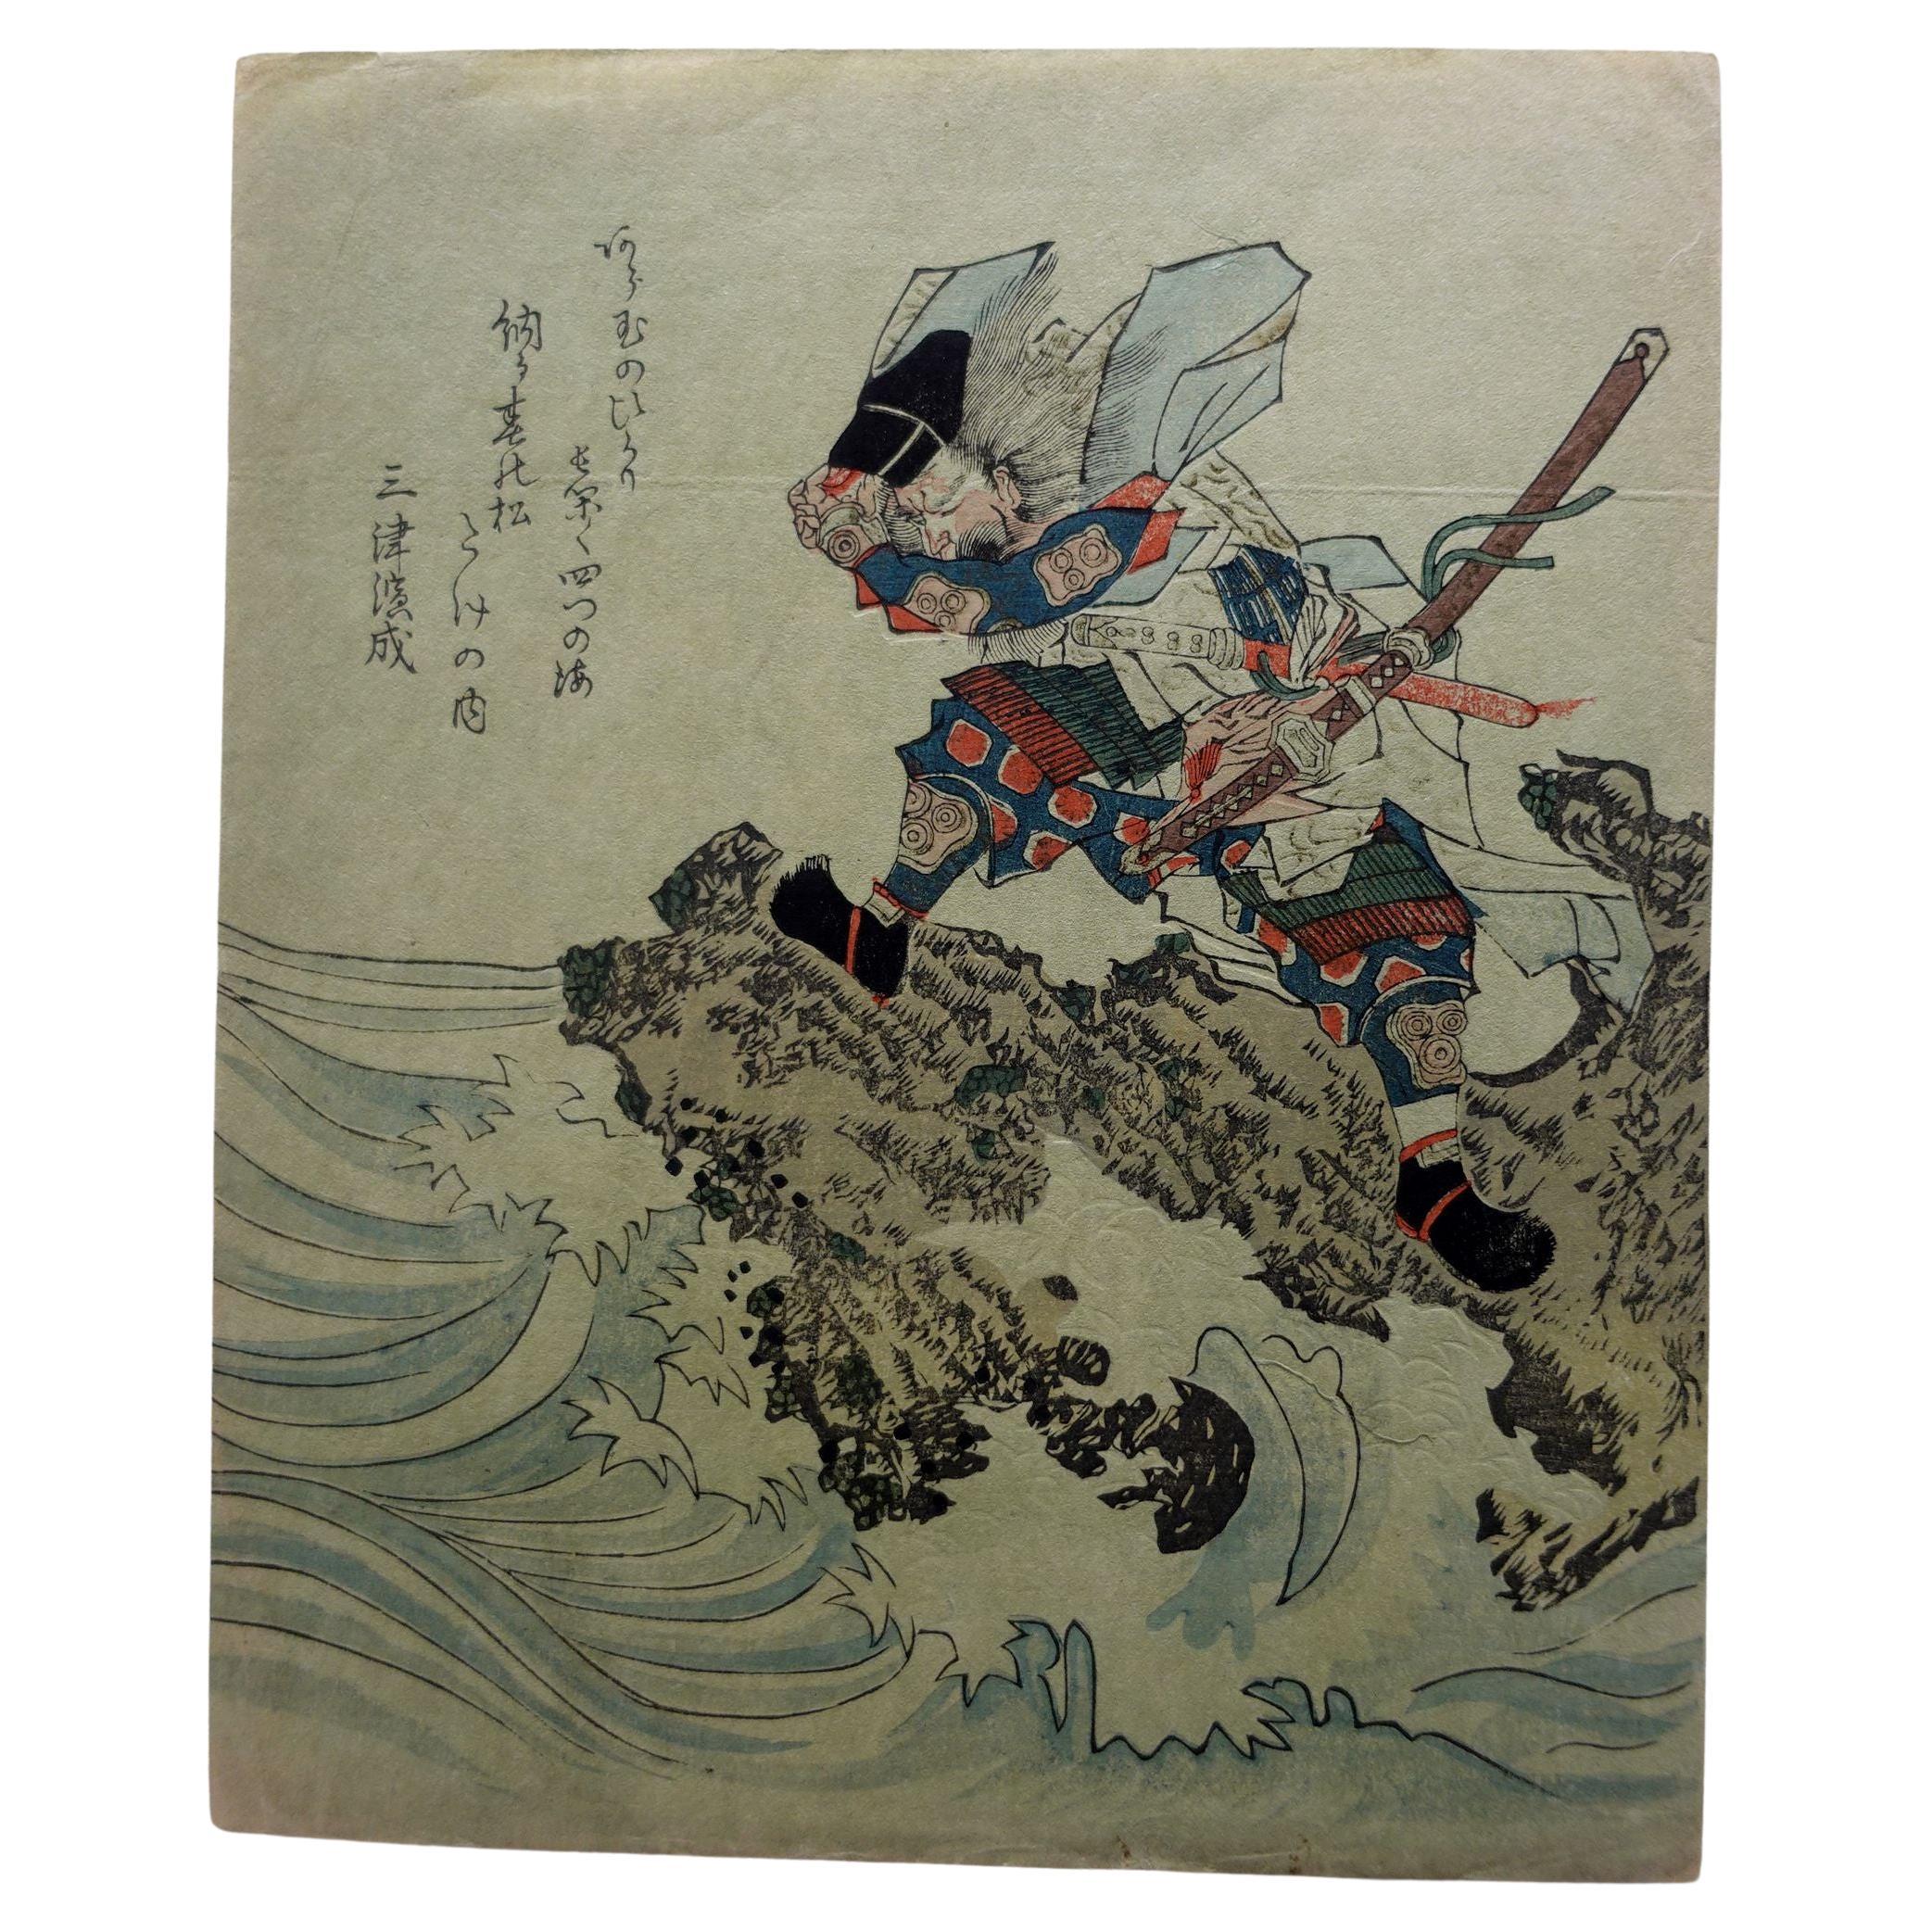 Japanese Woodblock Print by Yanagawa Shigenobu 柳川重信 '1880 version" For Sale